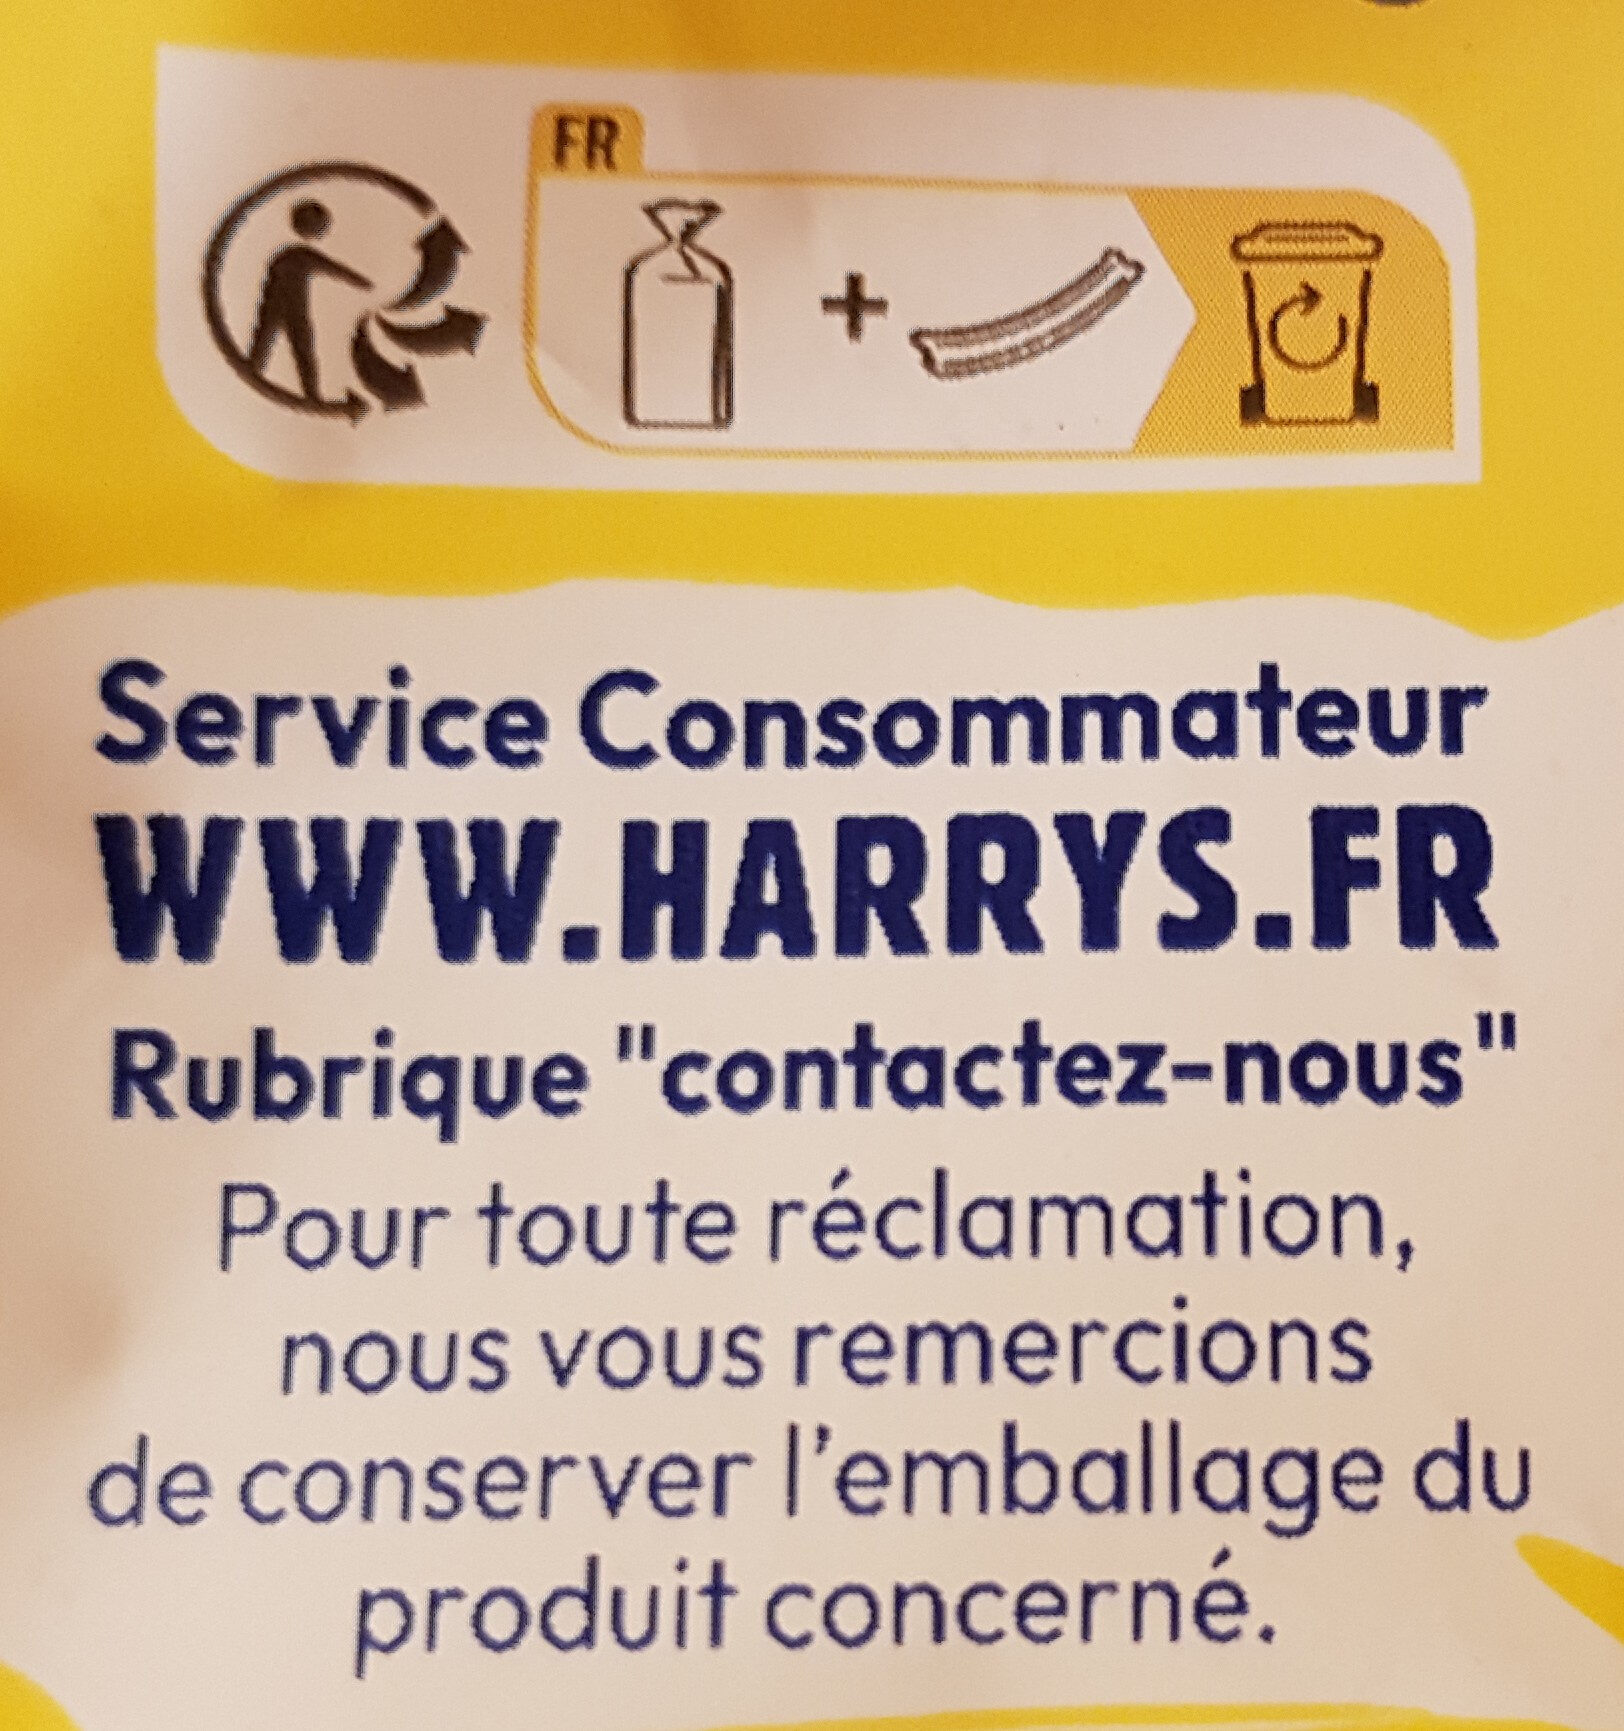 Harrys brioche tranchee farine complete sans additif 485g - Instruction de recyclage et/ou informations d'emballage